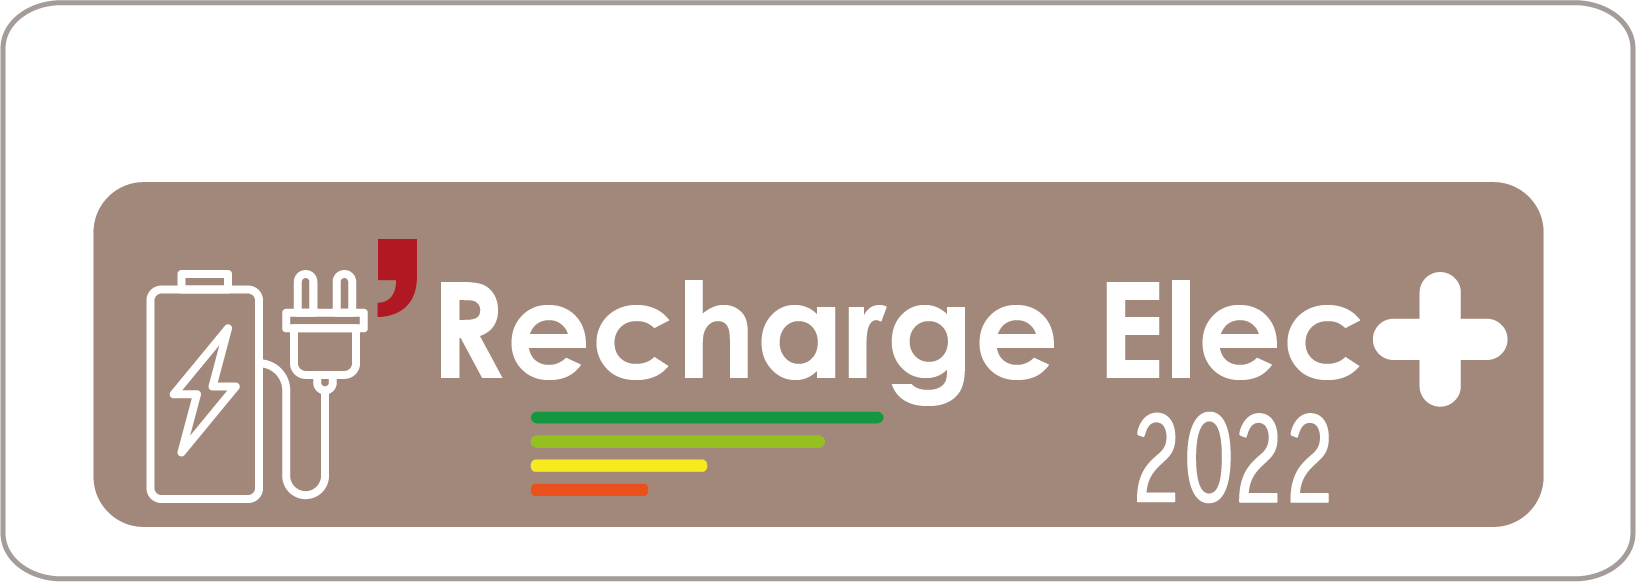 10122_logo_Recharge_Elec+_2022-png